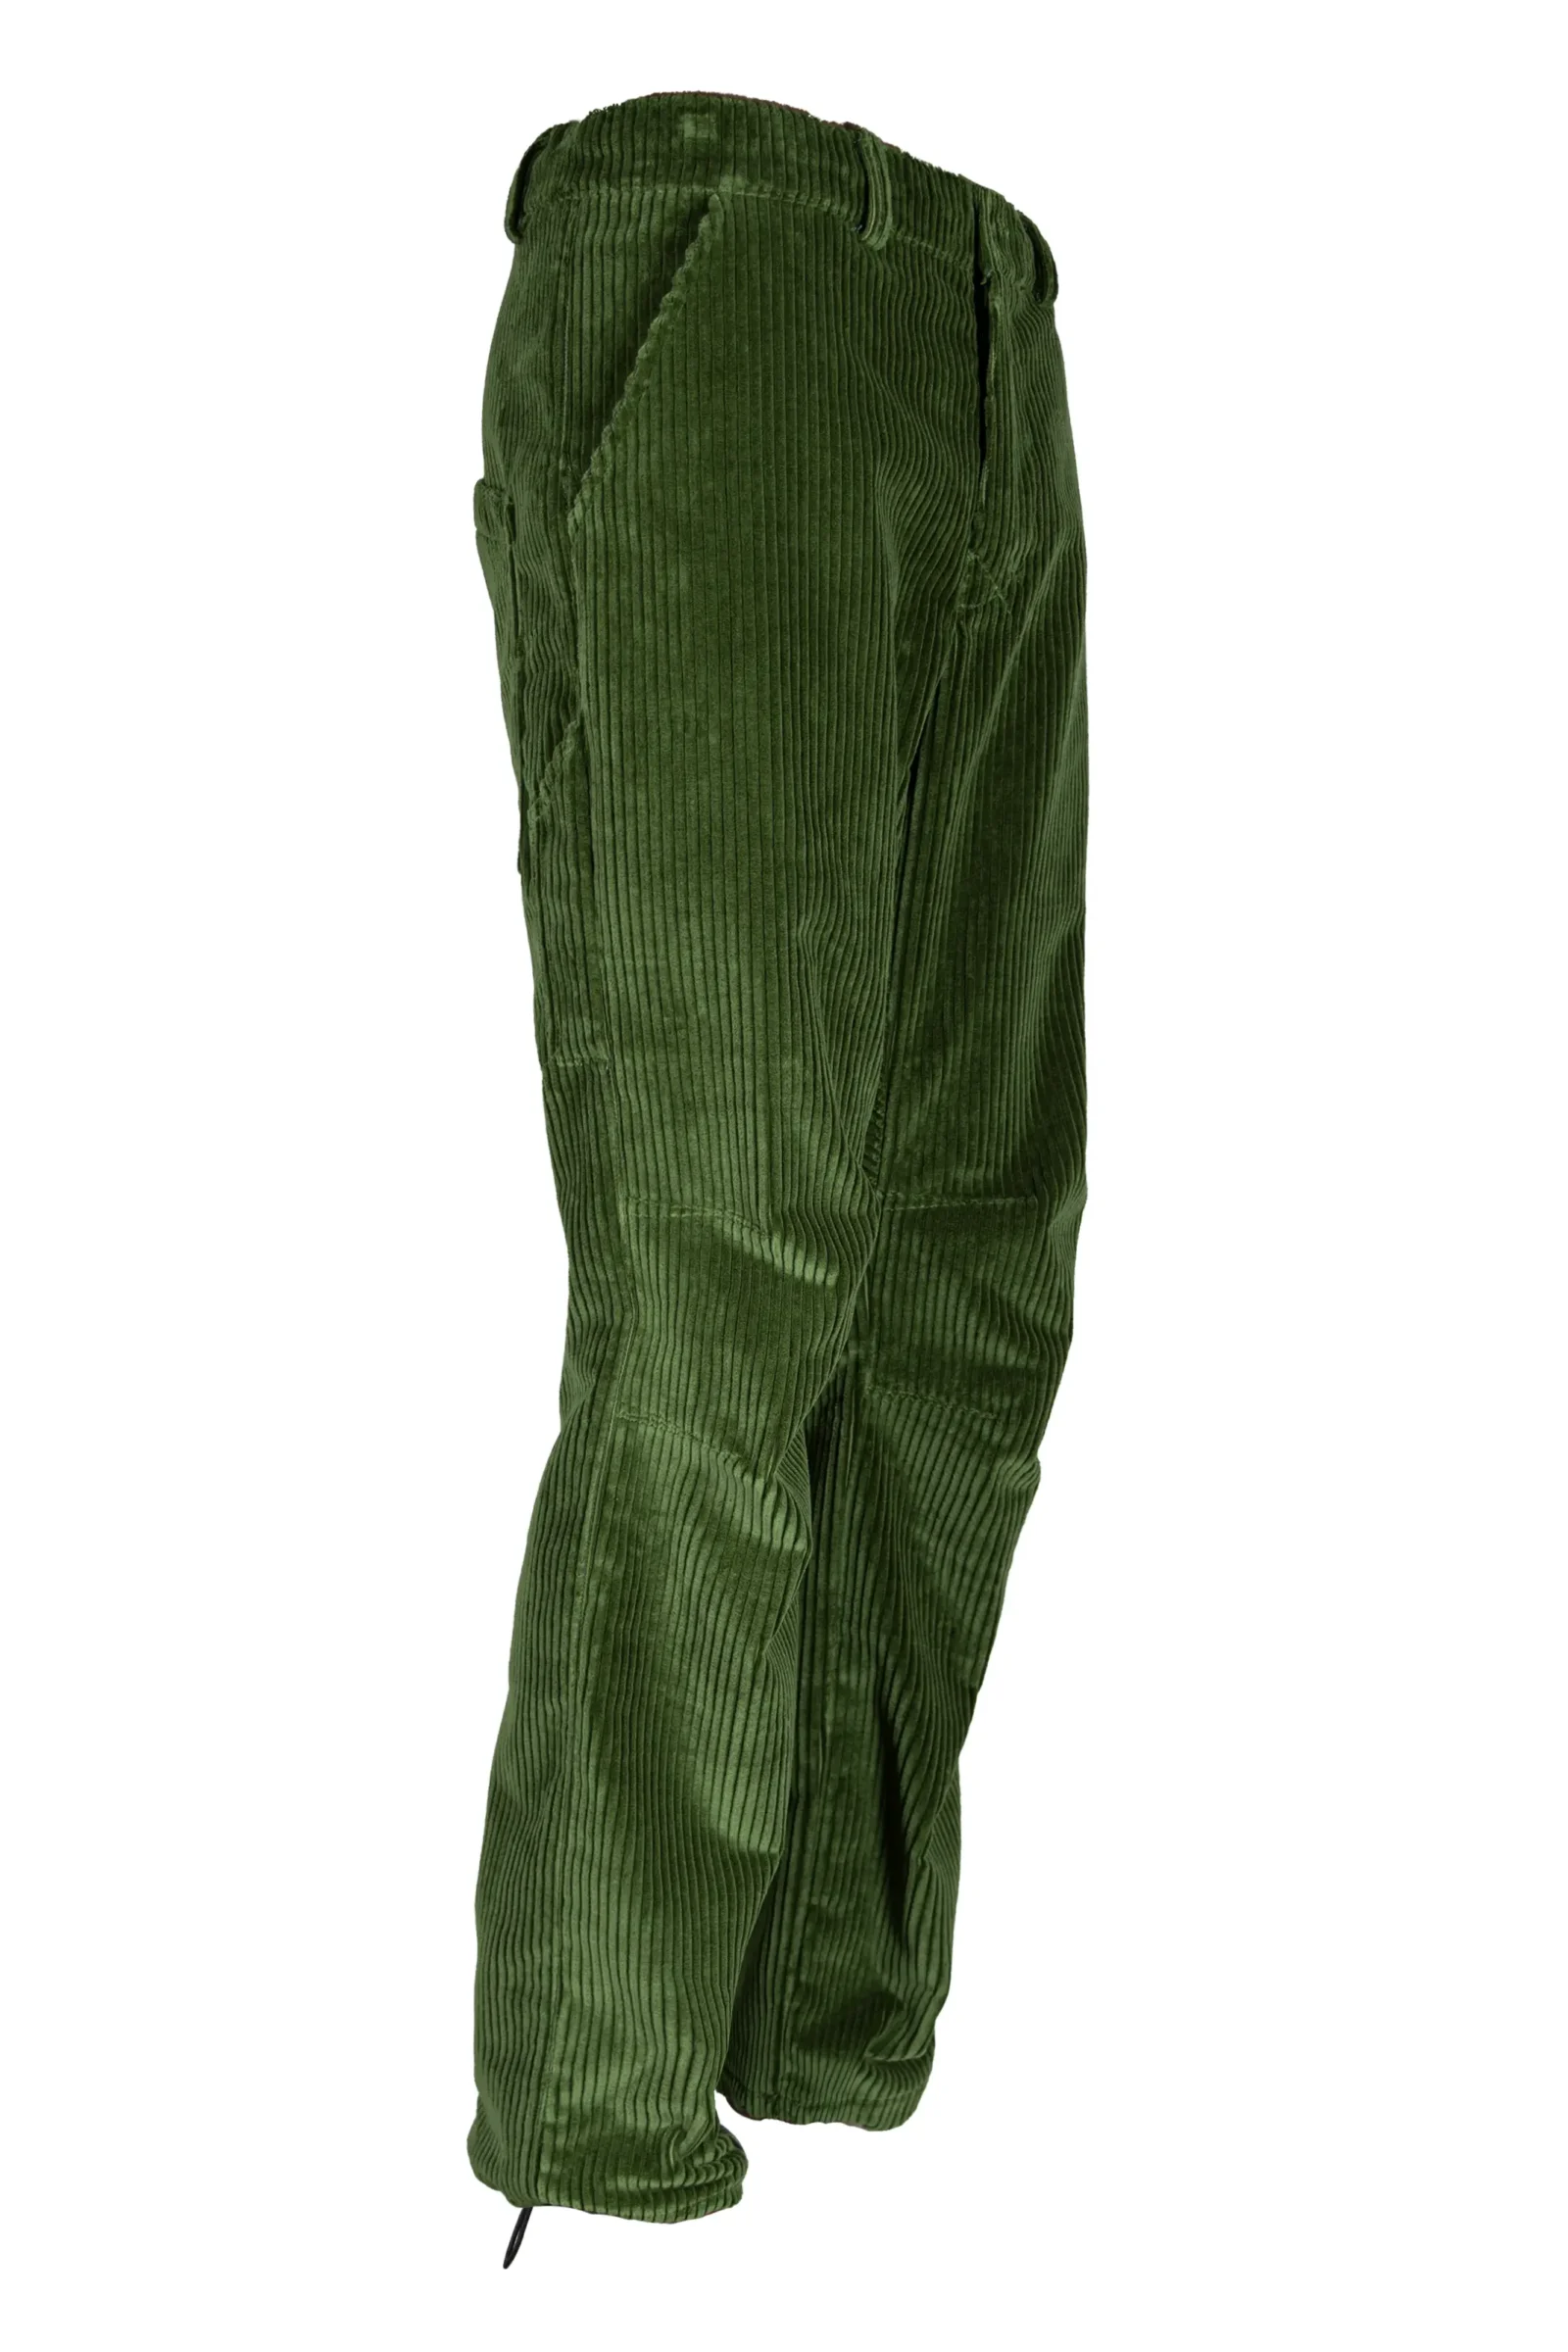 Pantalon homme - velours côtelé moyen - vert forêt - GRILLO MONVIC